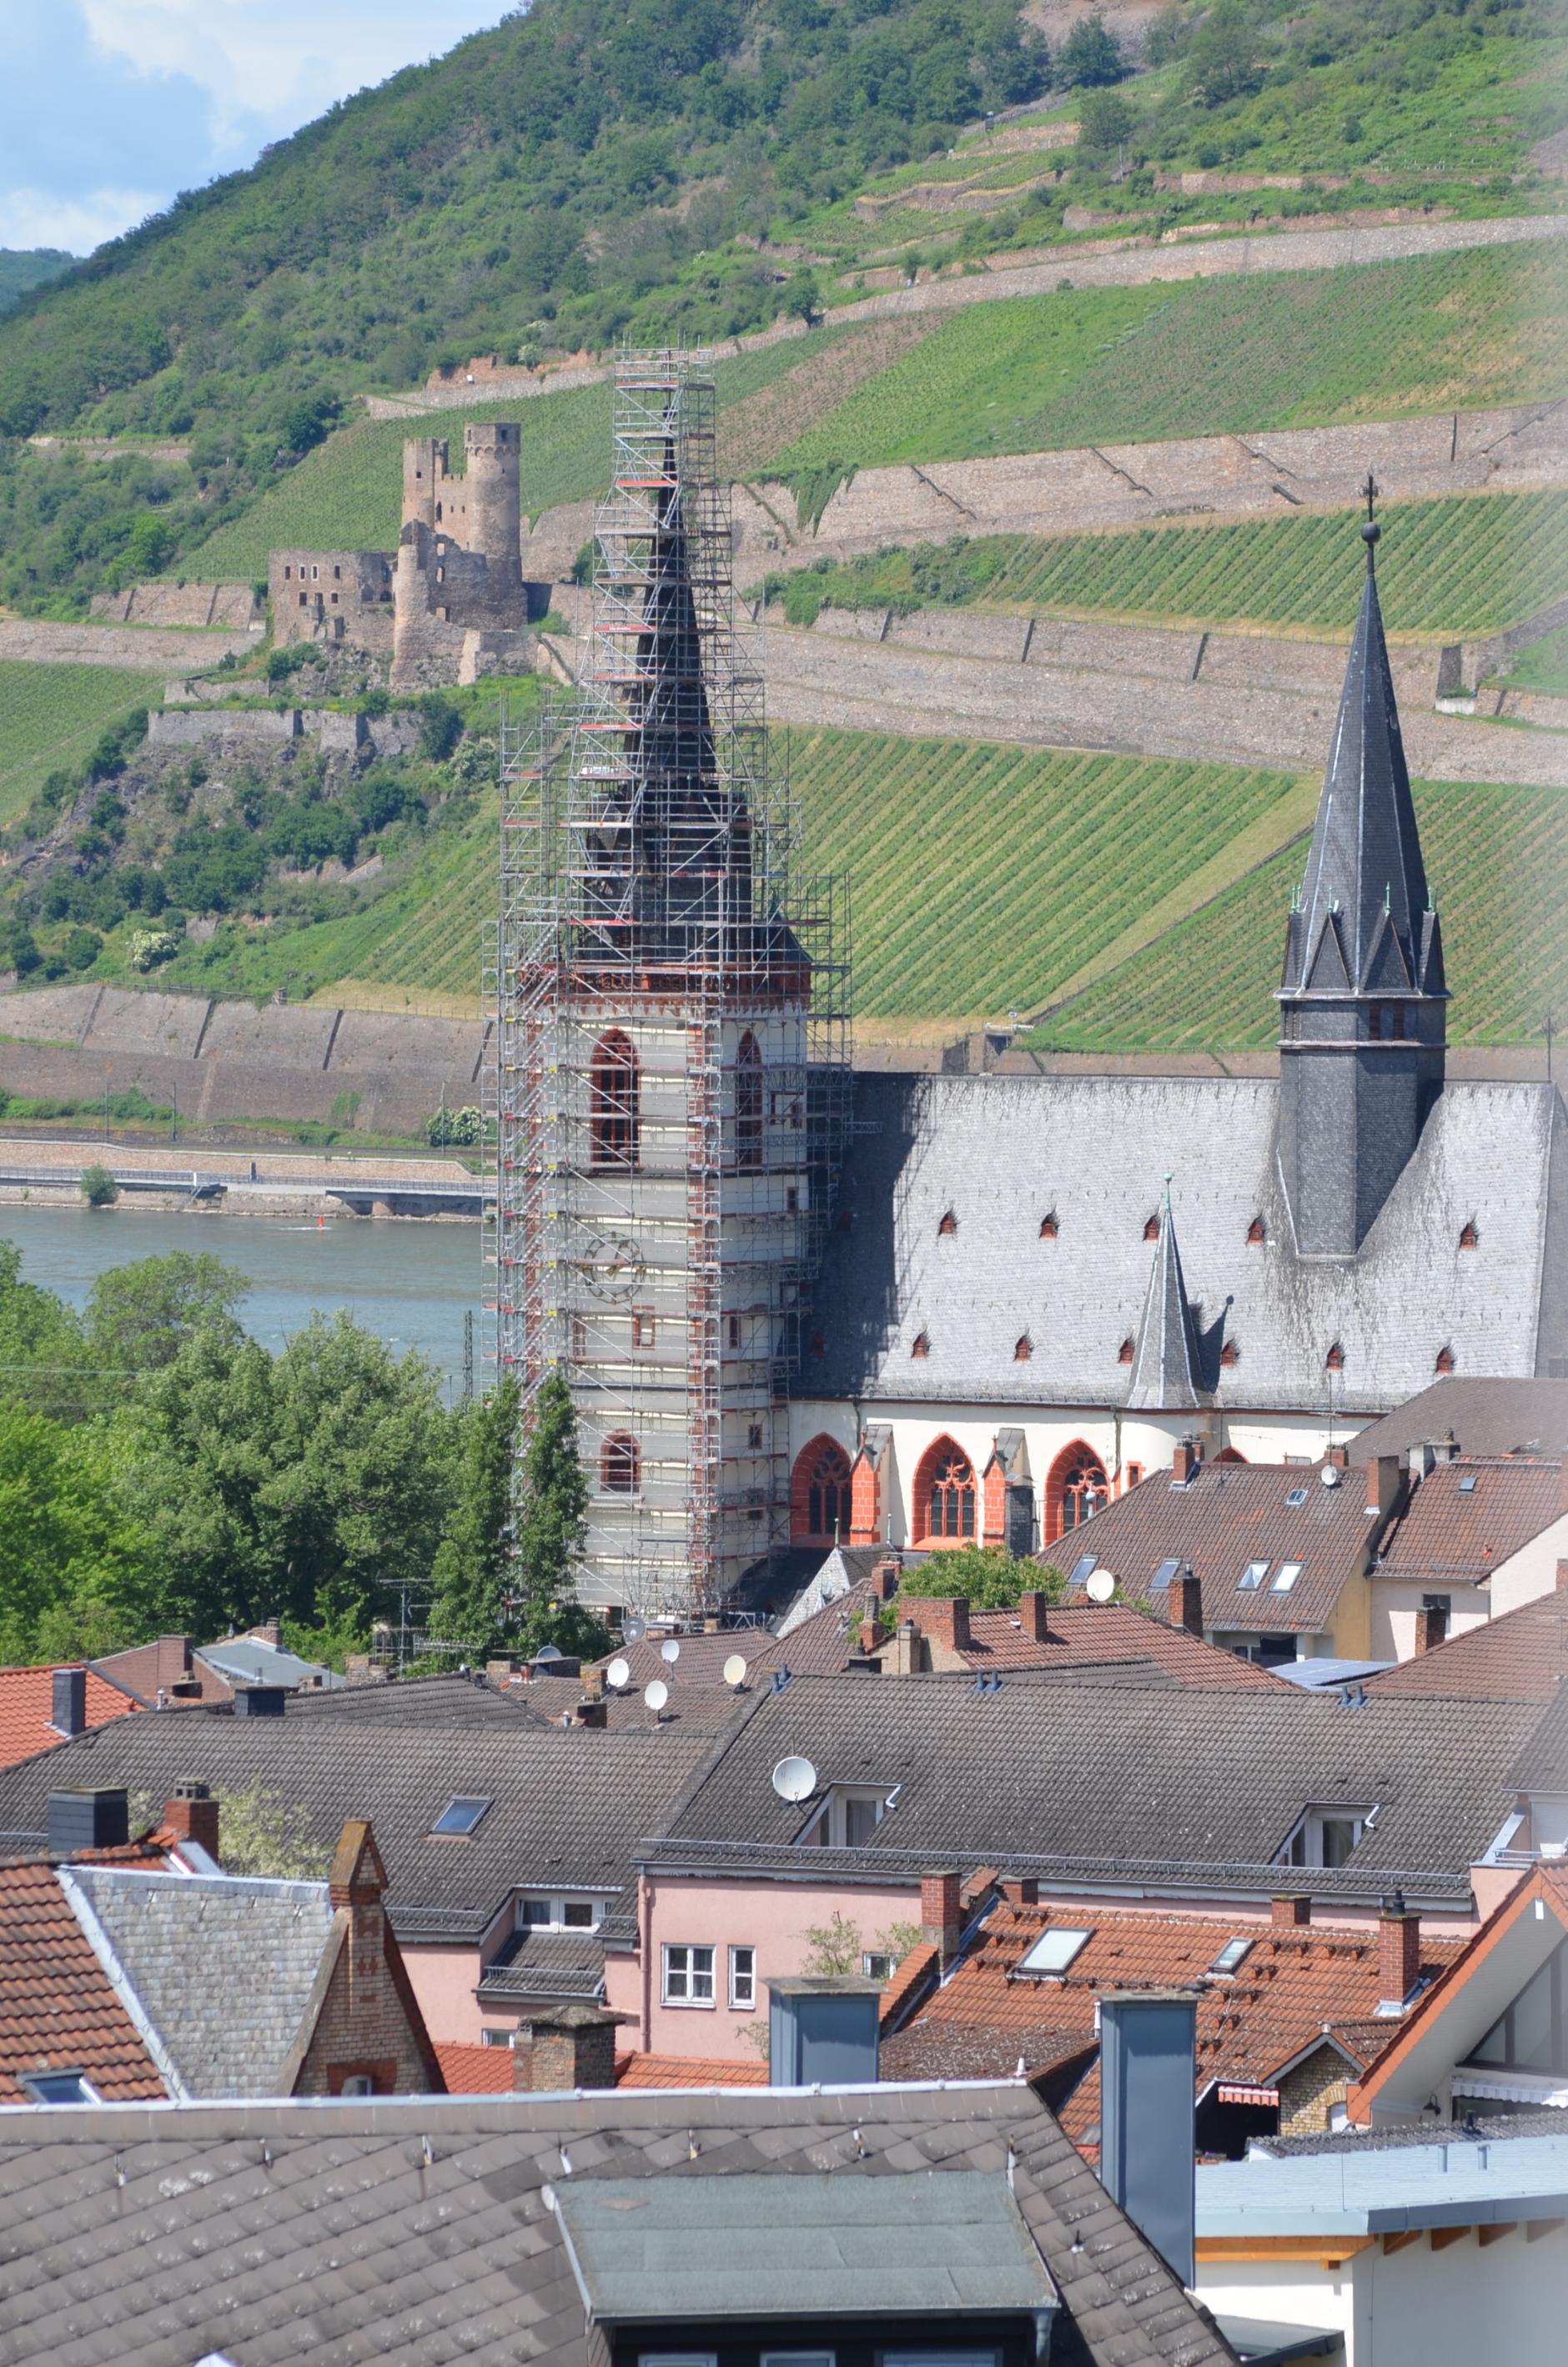 Basilika eingerästet (c) Hermann-Josef Gundlach